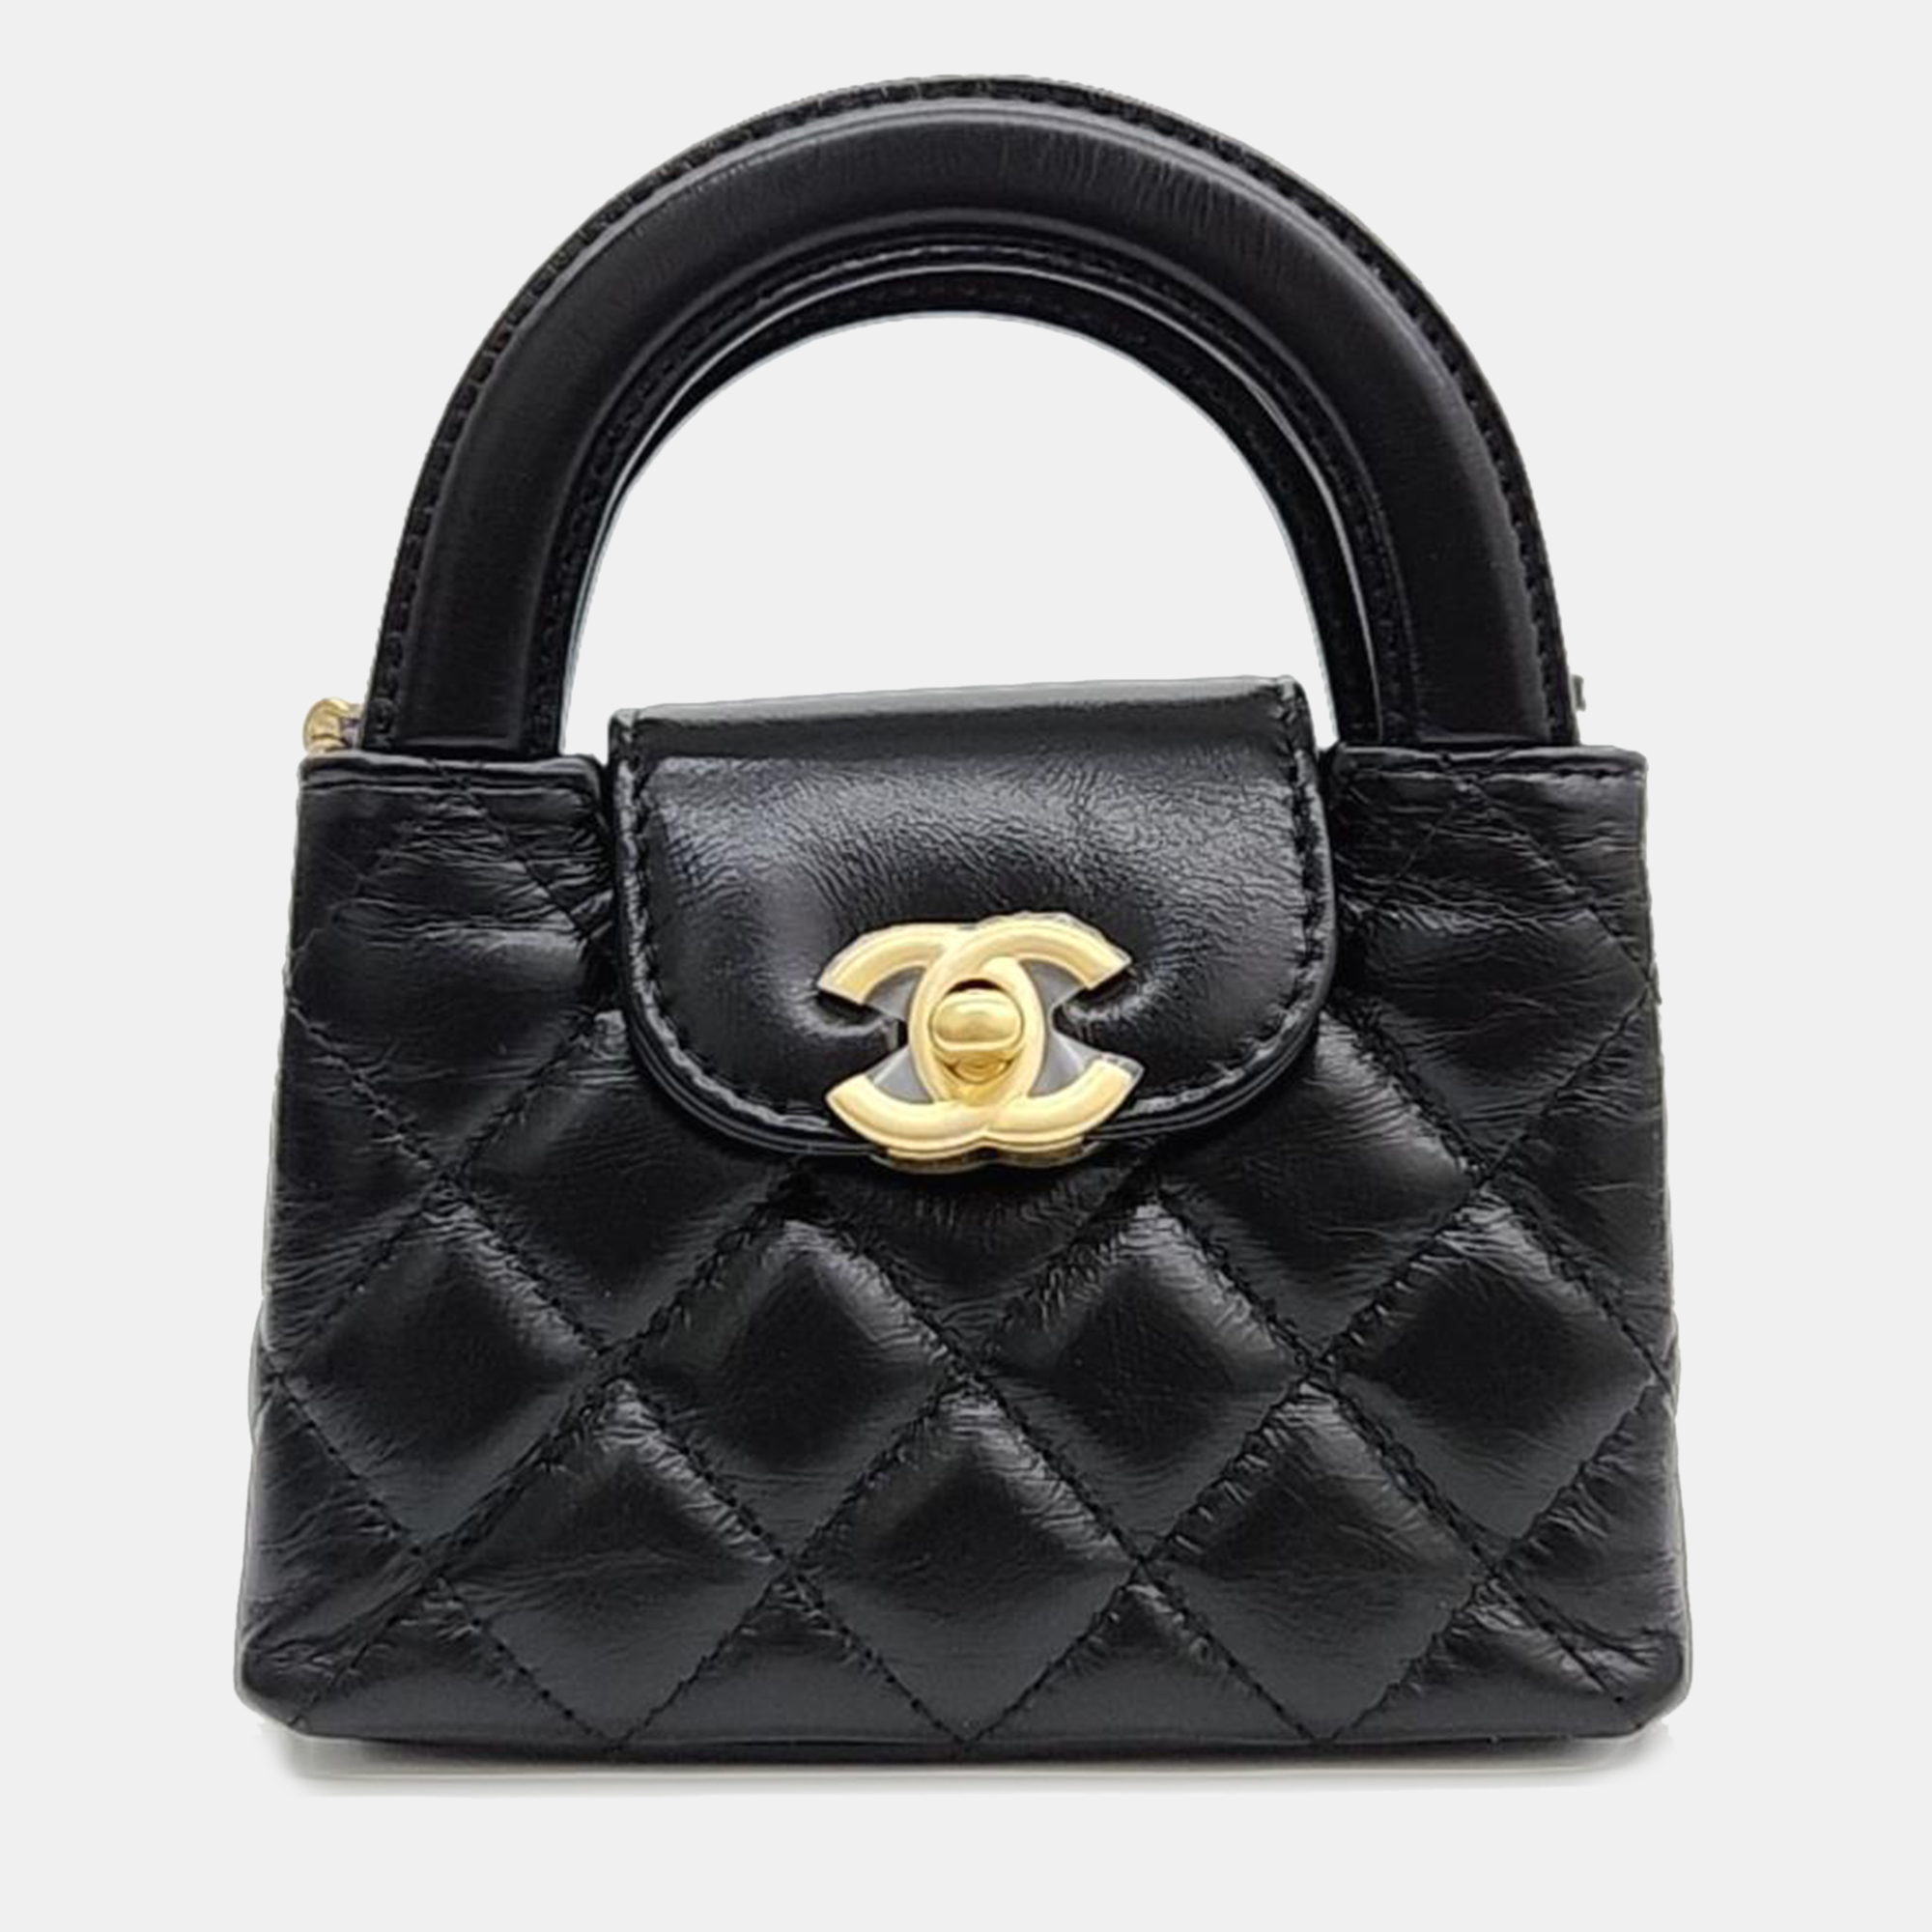 Chanel leather black mini shopping bag